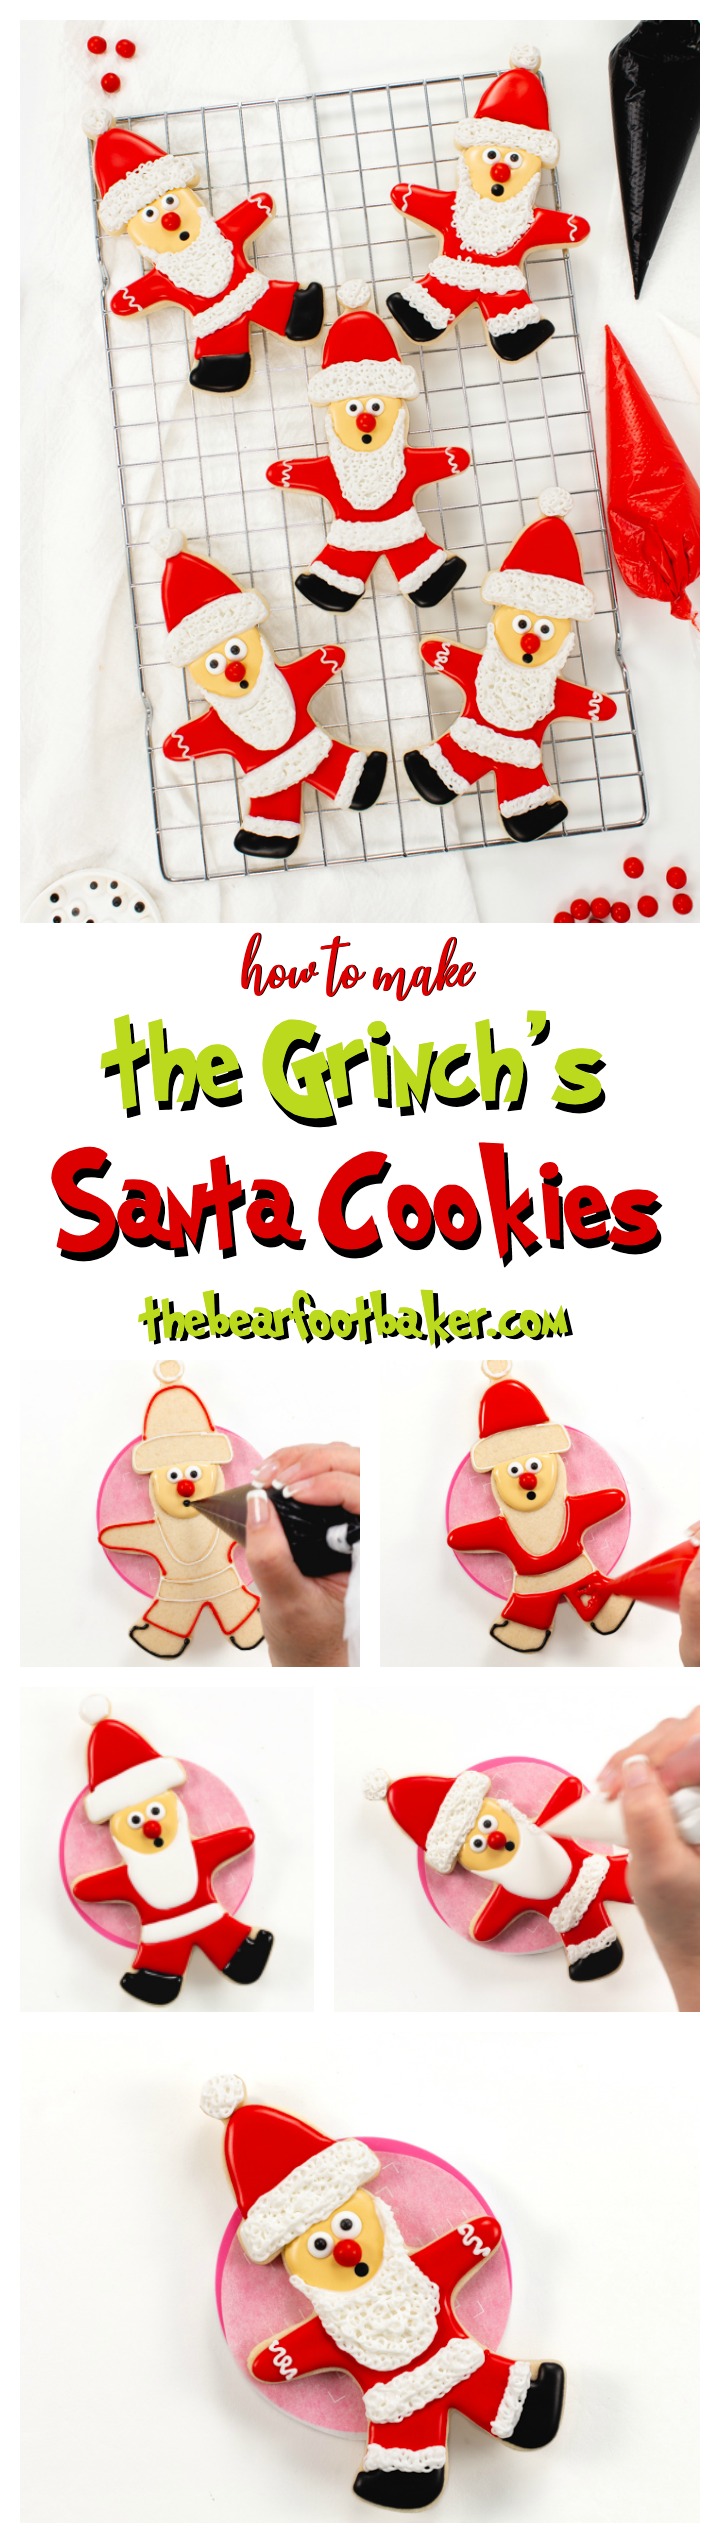 The Grinch, Grinch Santa Cookies, Christmas Cookies, Santa Cookie, Cookie Tutorial, Sugar Cookie Tutorial, Royal Icing